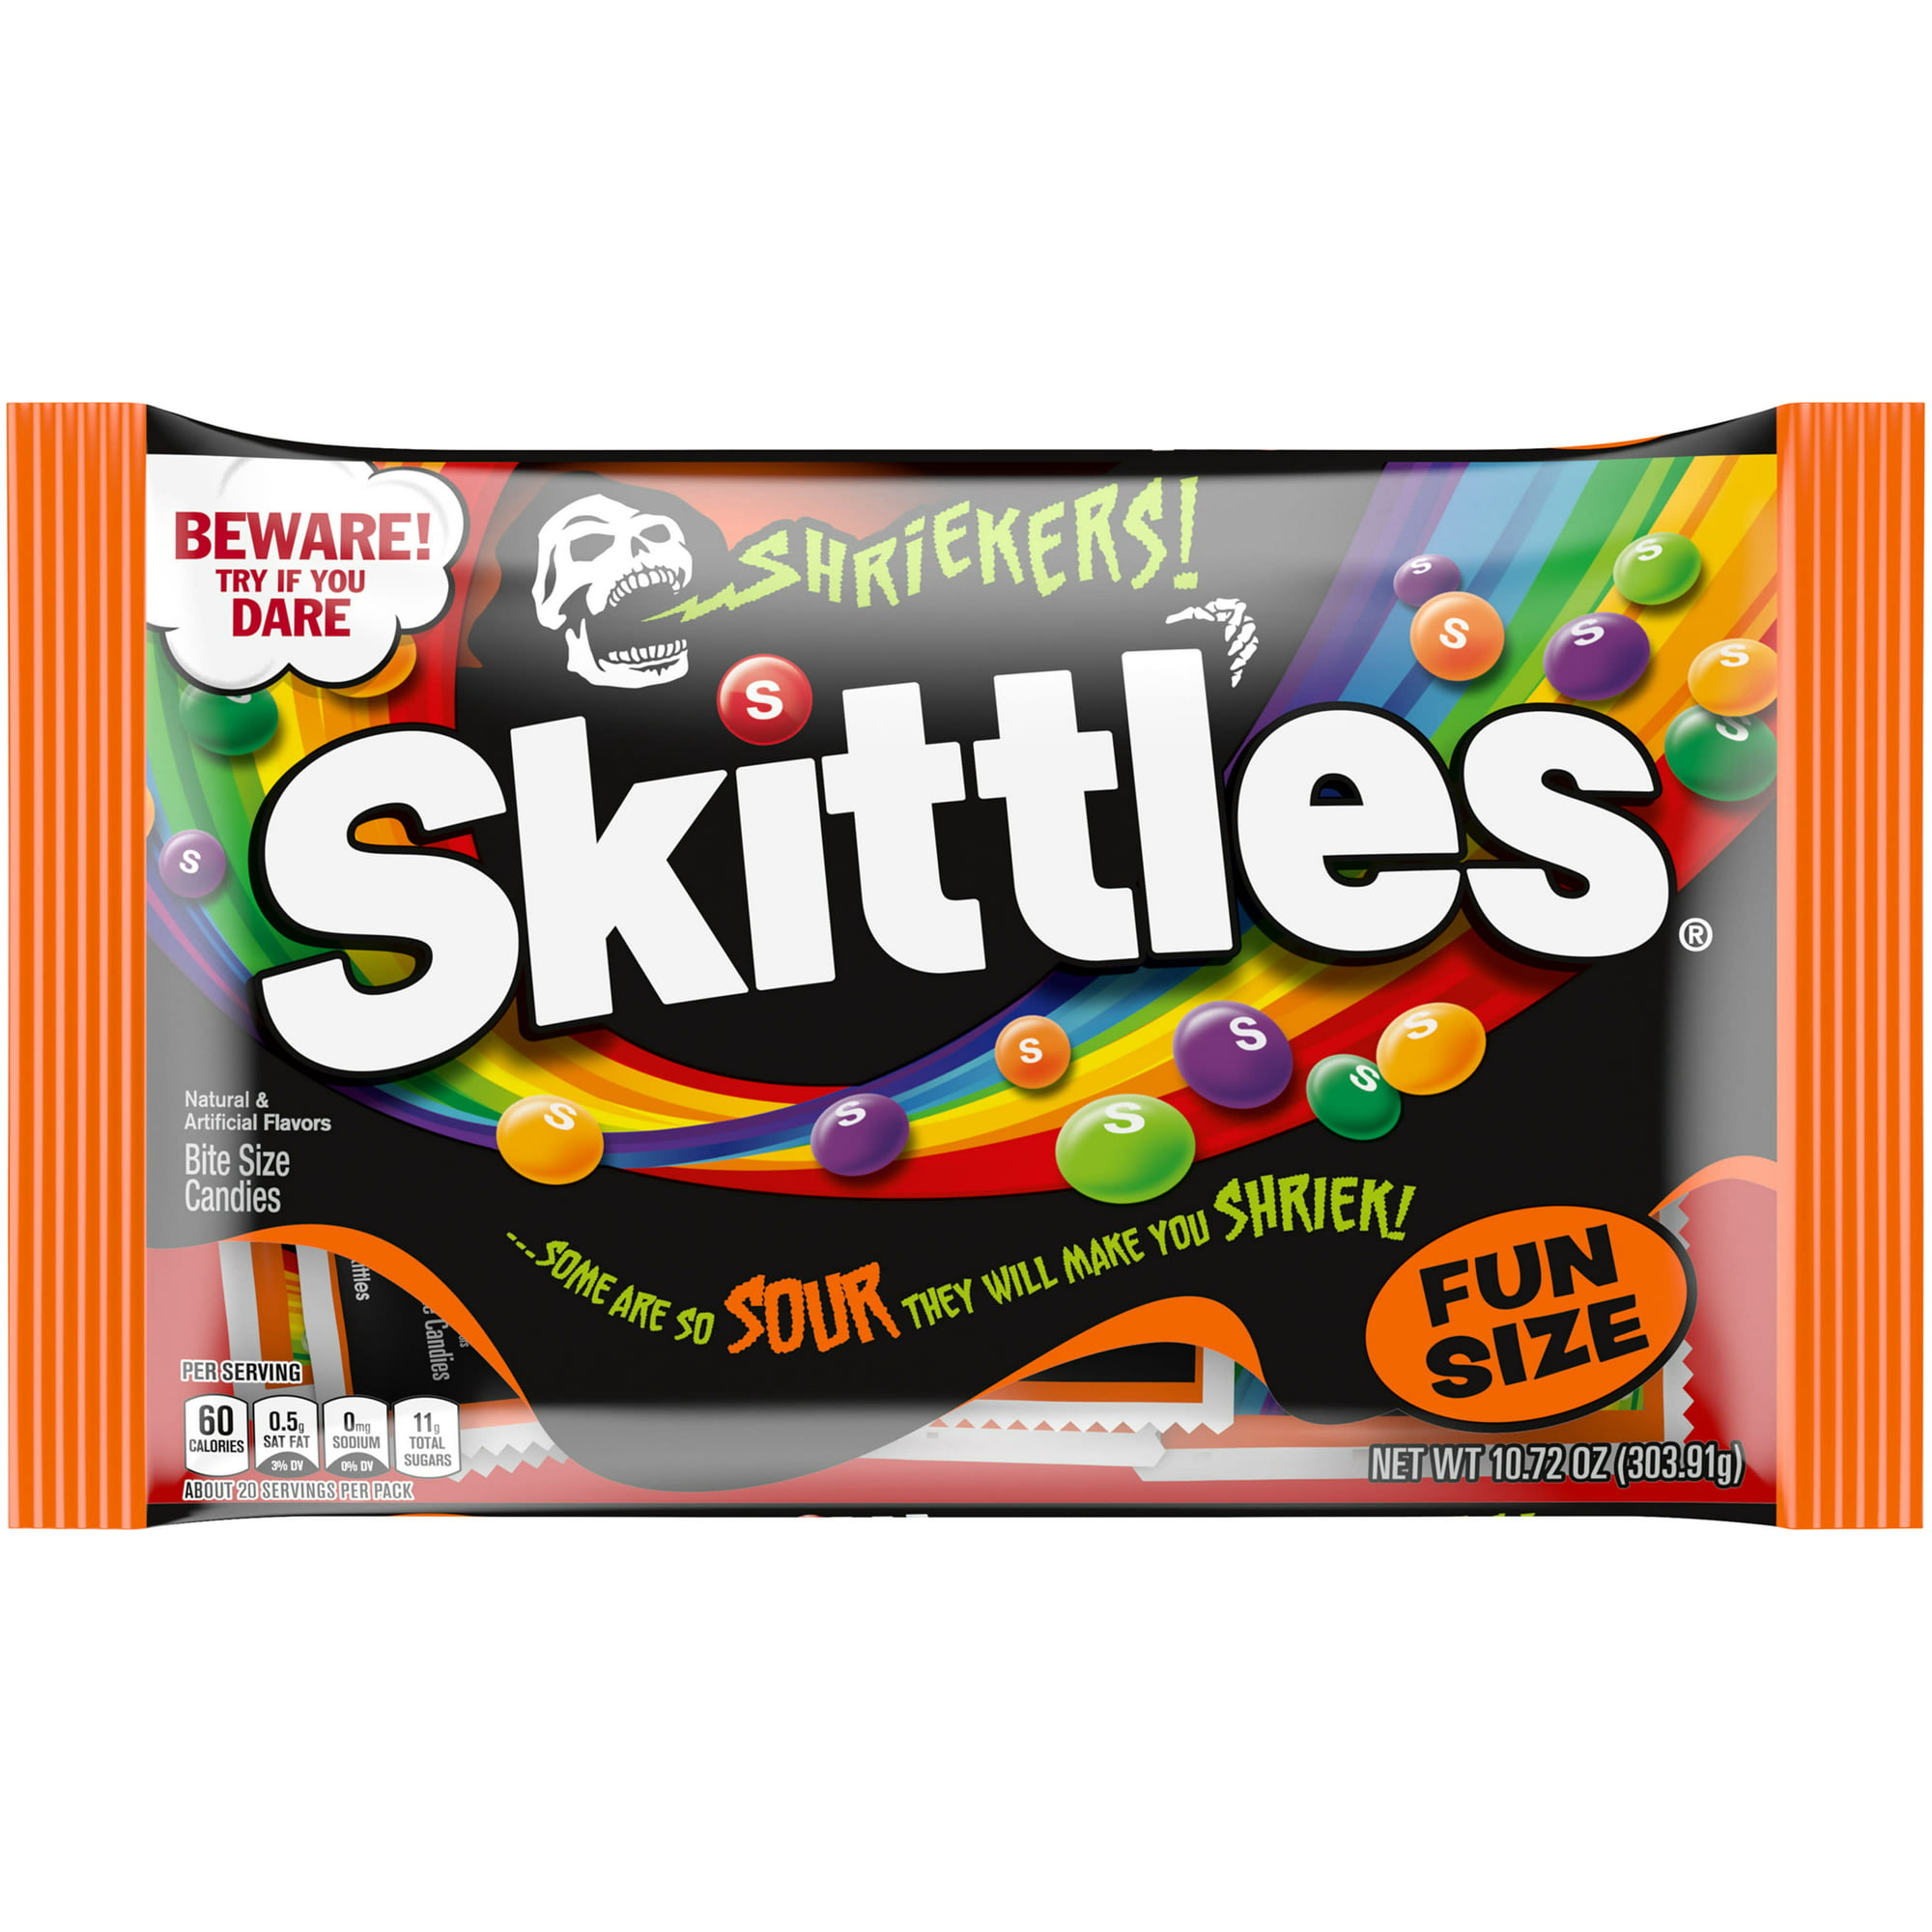 Fun-sized Bag of Skittles